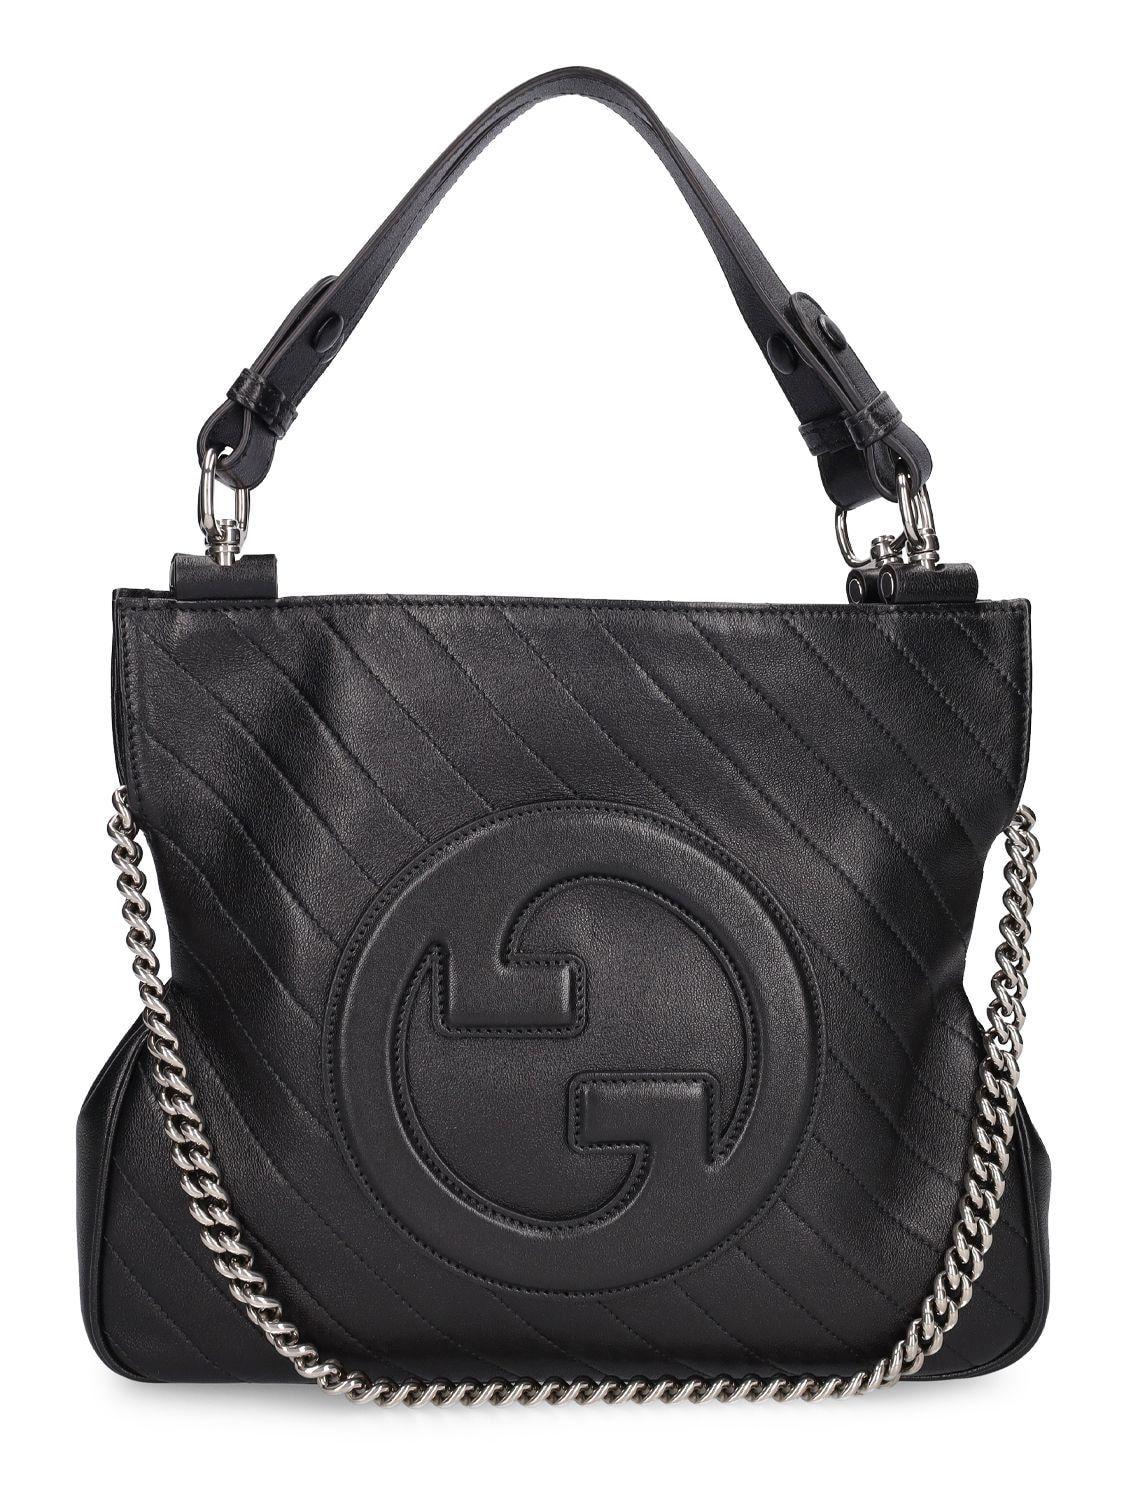 Gucci Blondie Leather Tote Bag in Black | Lyst